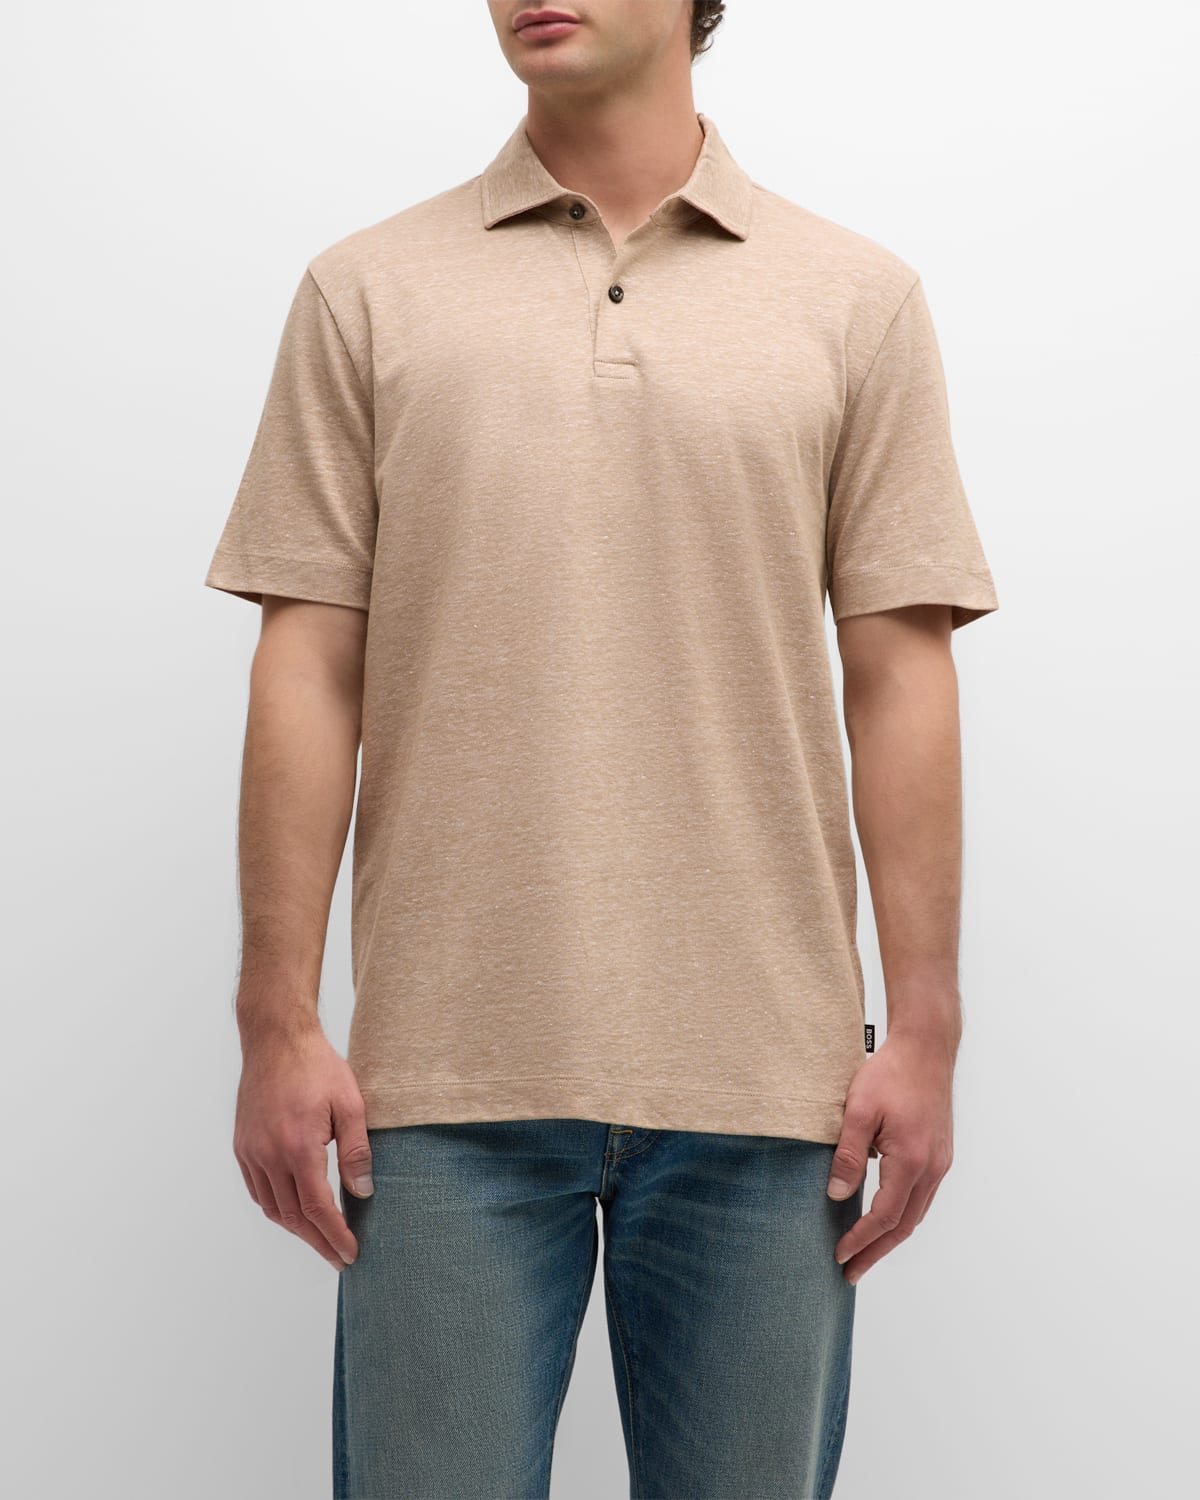 Men's Solid Linen Cotton Short-Sleeve Polo Shirt